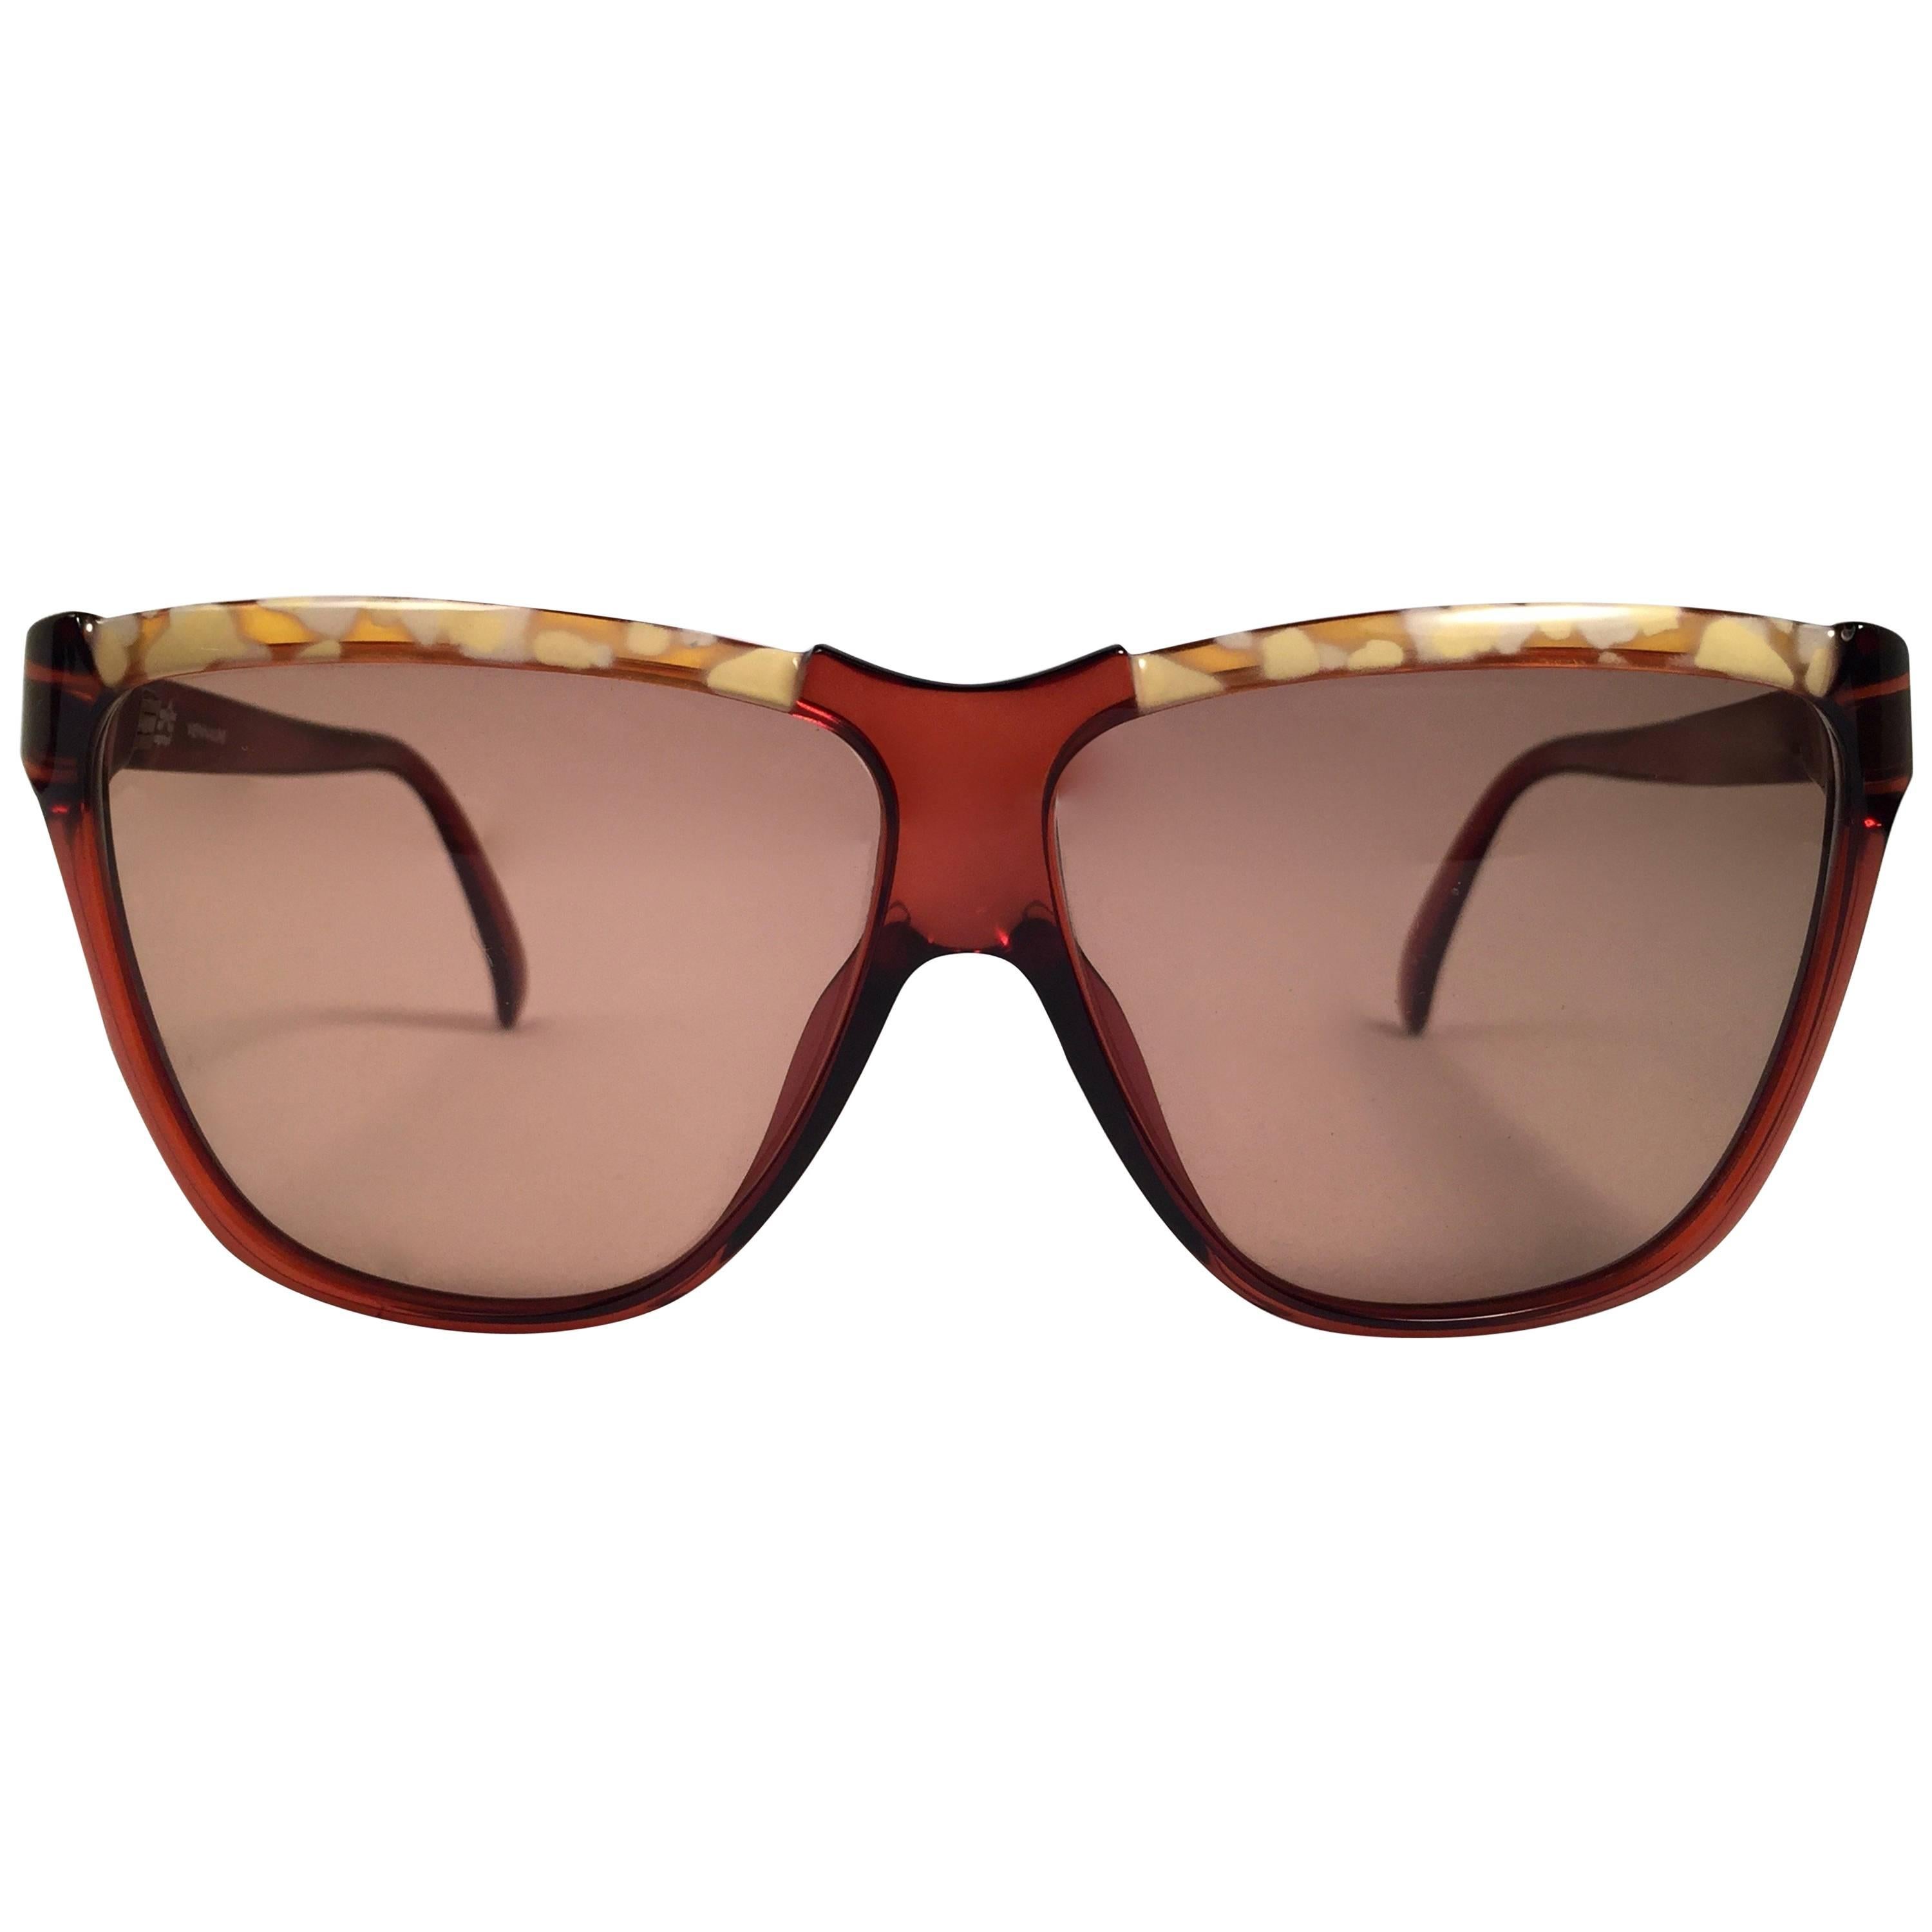 New Vintage Viennaline Brown Translucent Oversized Sunglasses Germany 1980